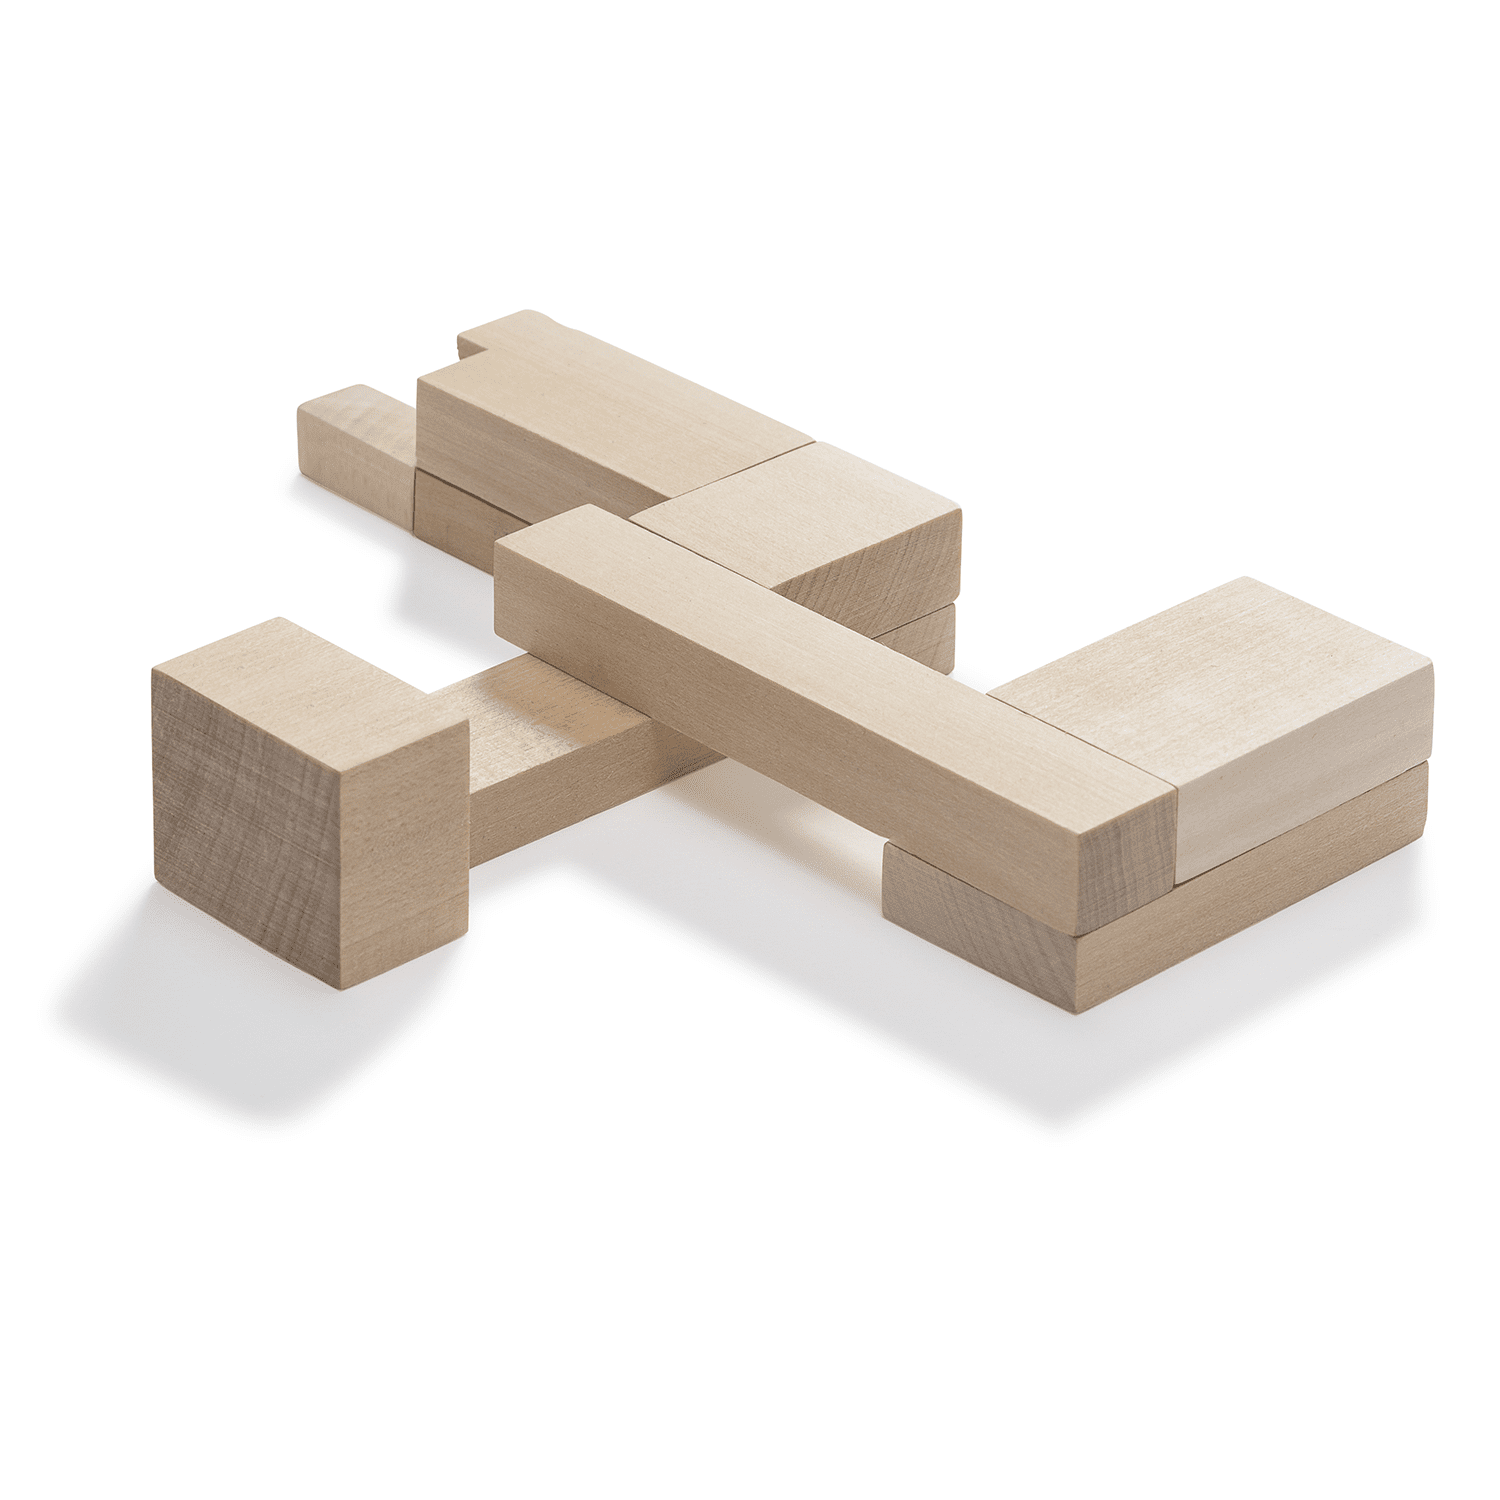 Bauhaus Dessau Building Puzzle resmi